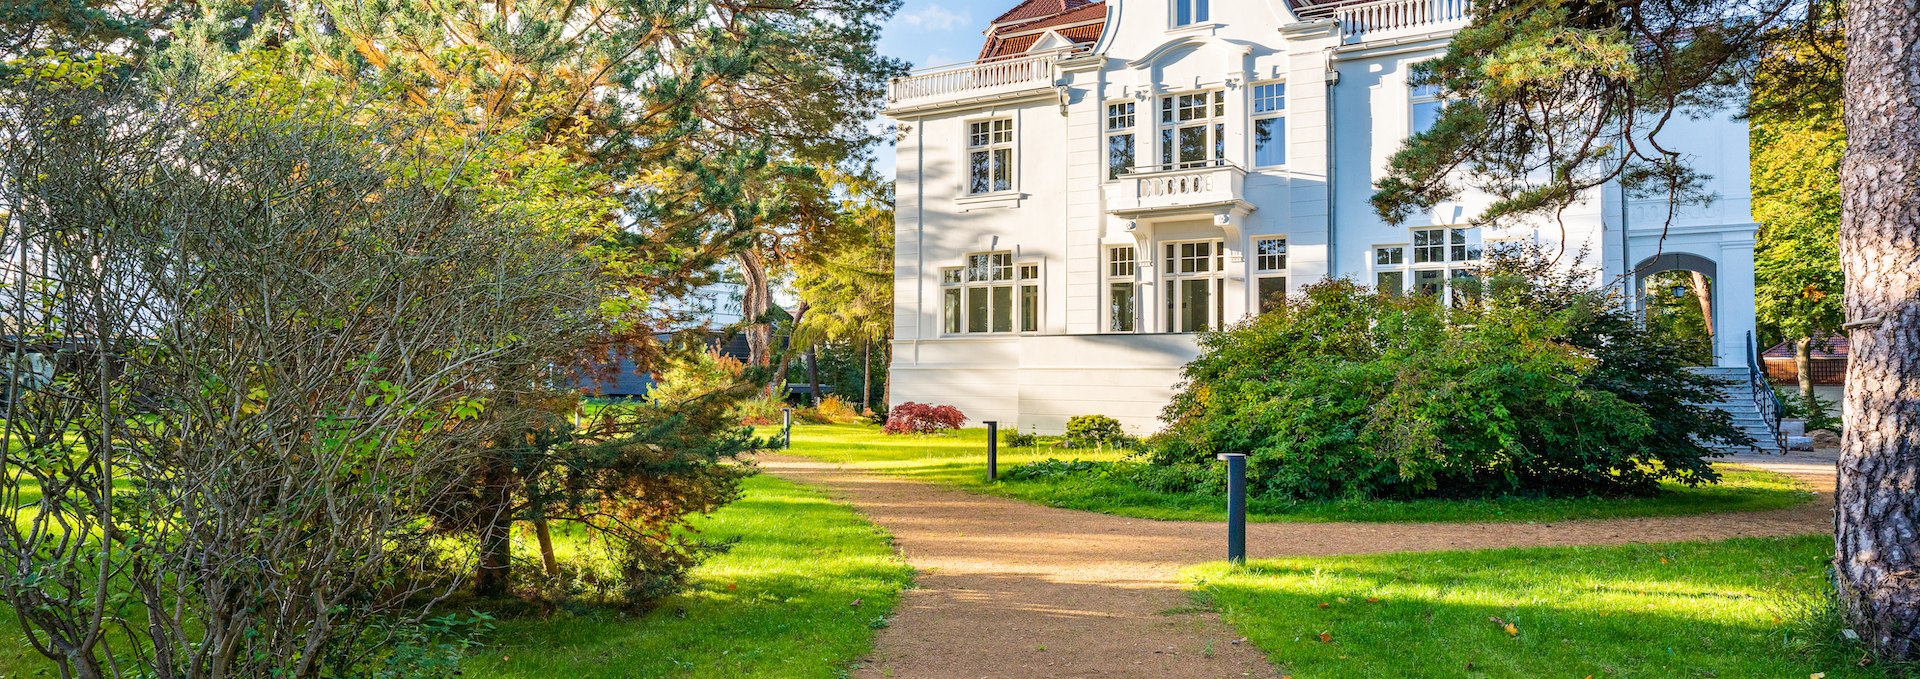 Historische Villas mit 7 Designunterkünften unmittelbar am Ostseestrand, © pineblue